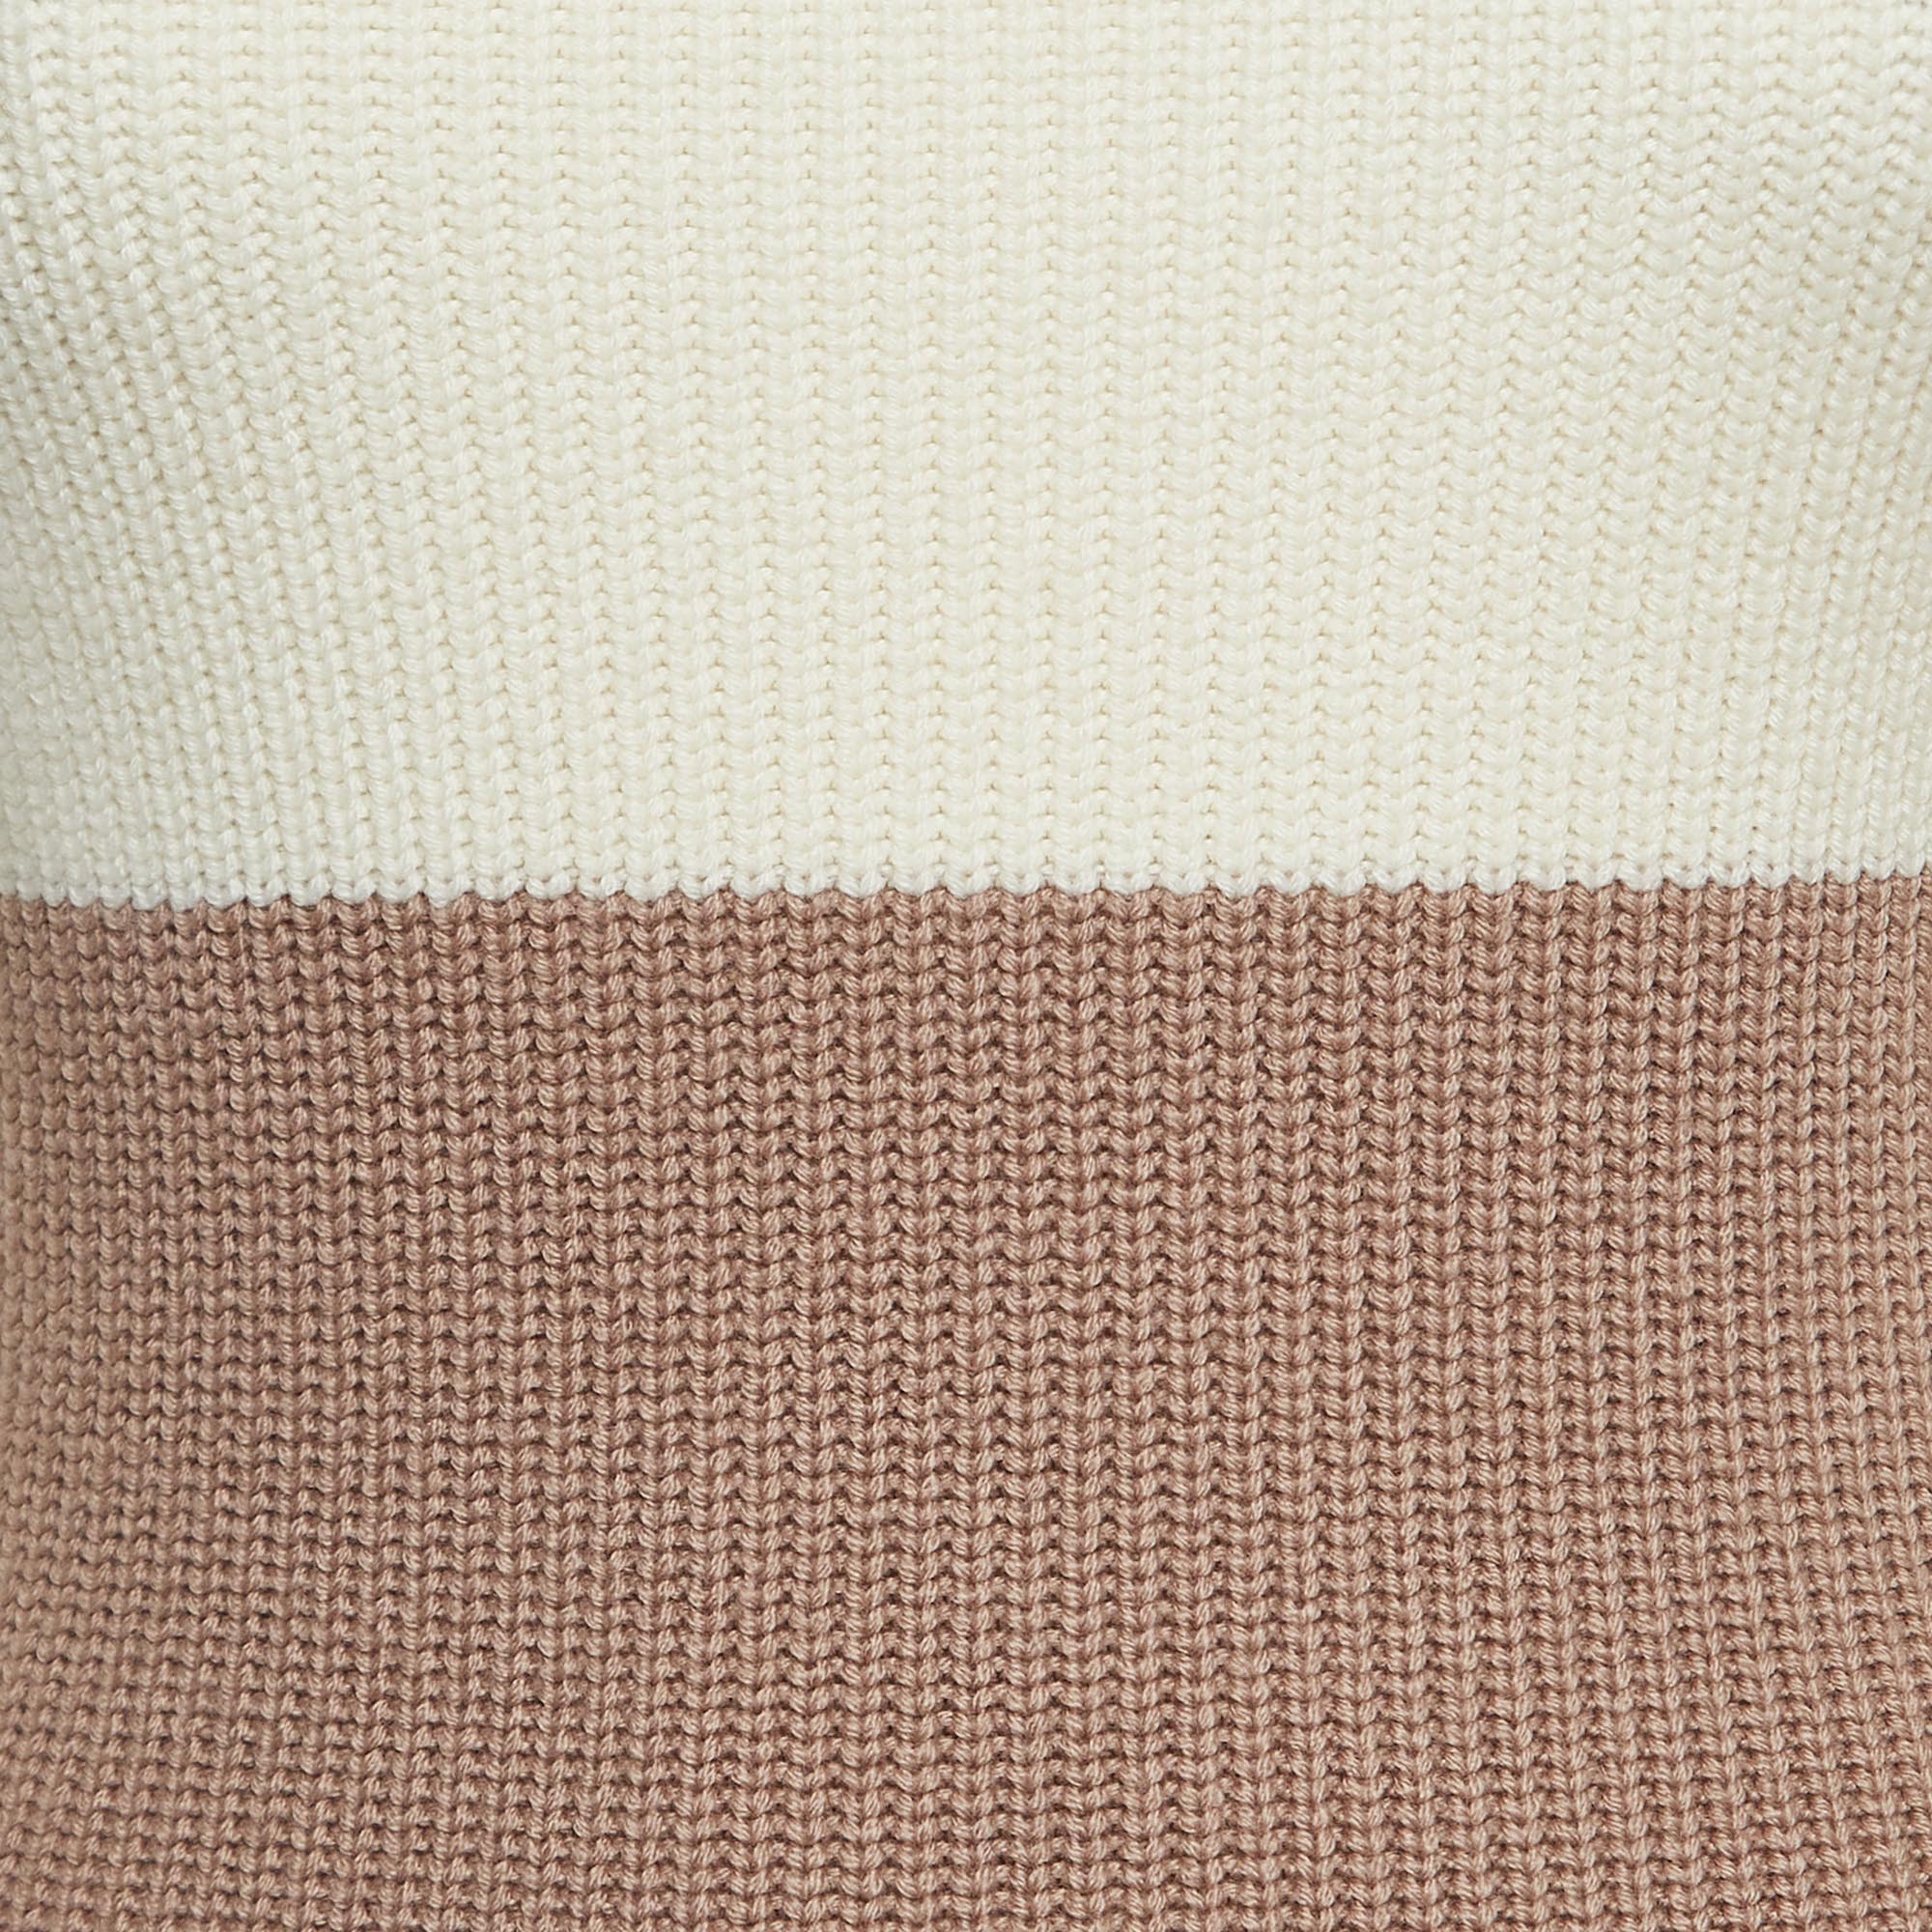 Elisabetta Franchi Ivory White/Mauve Colorblock Knit Dress S